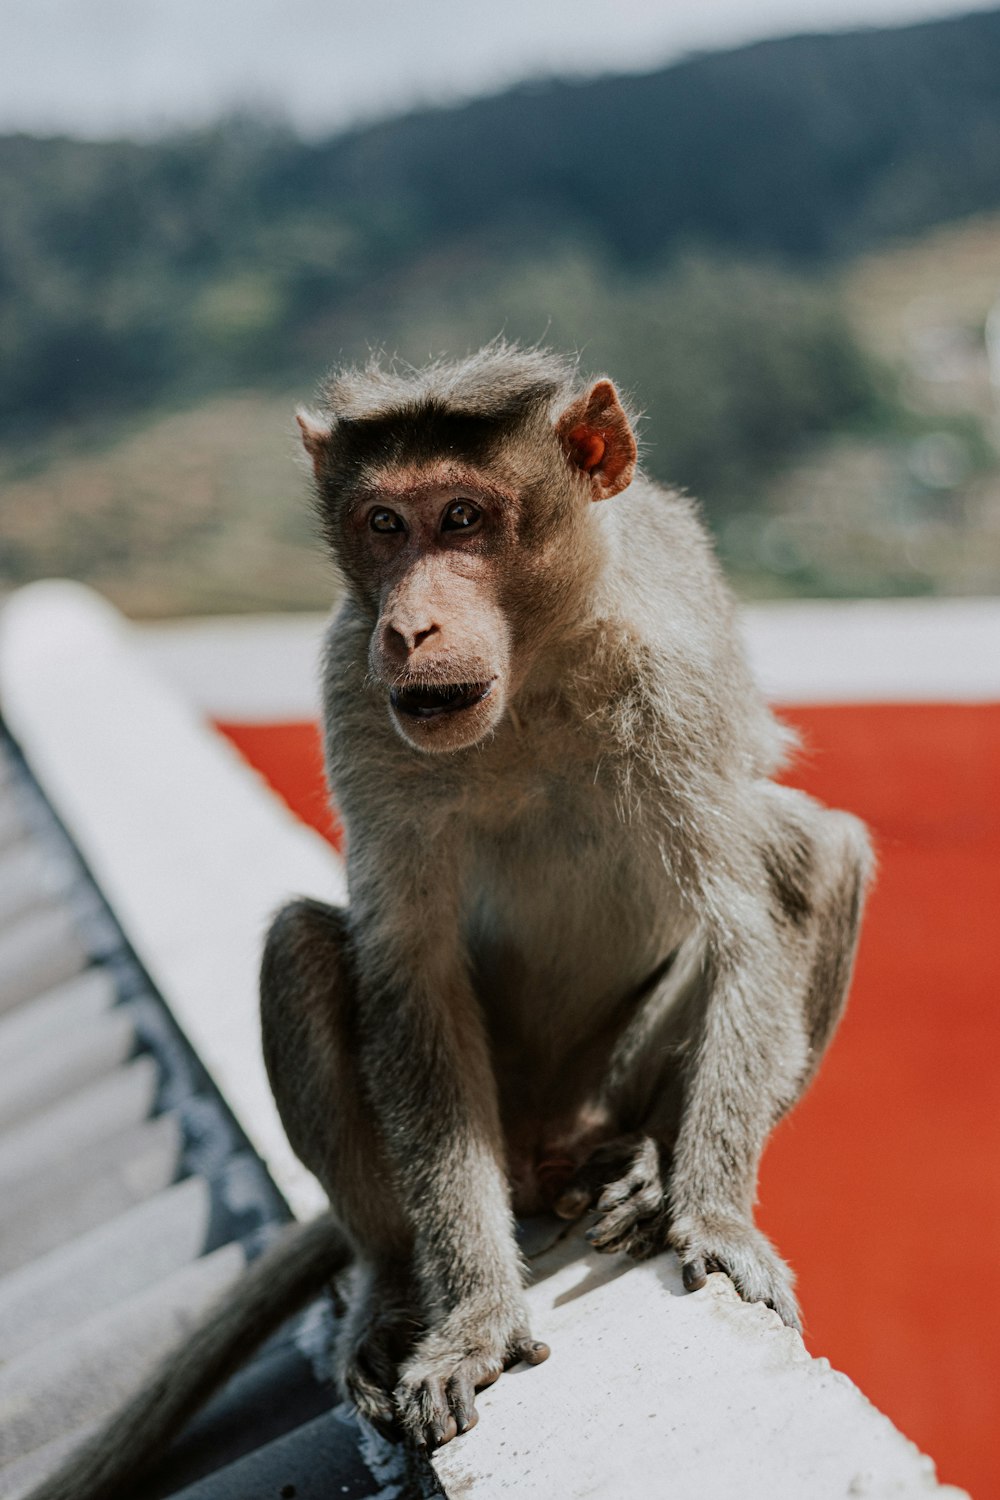 a monkey sitting on a ledge